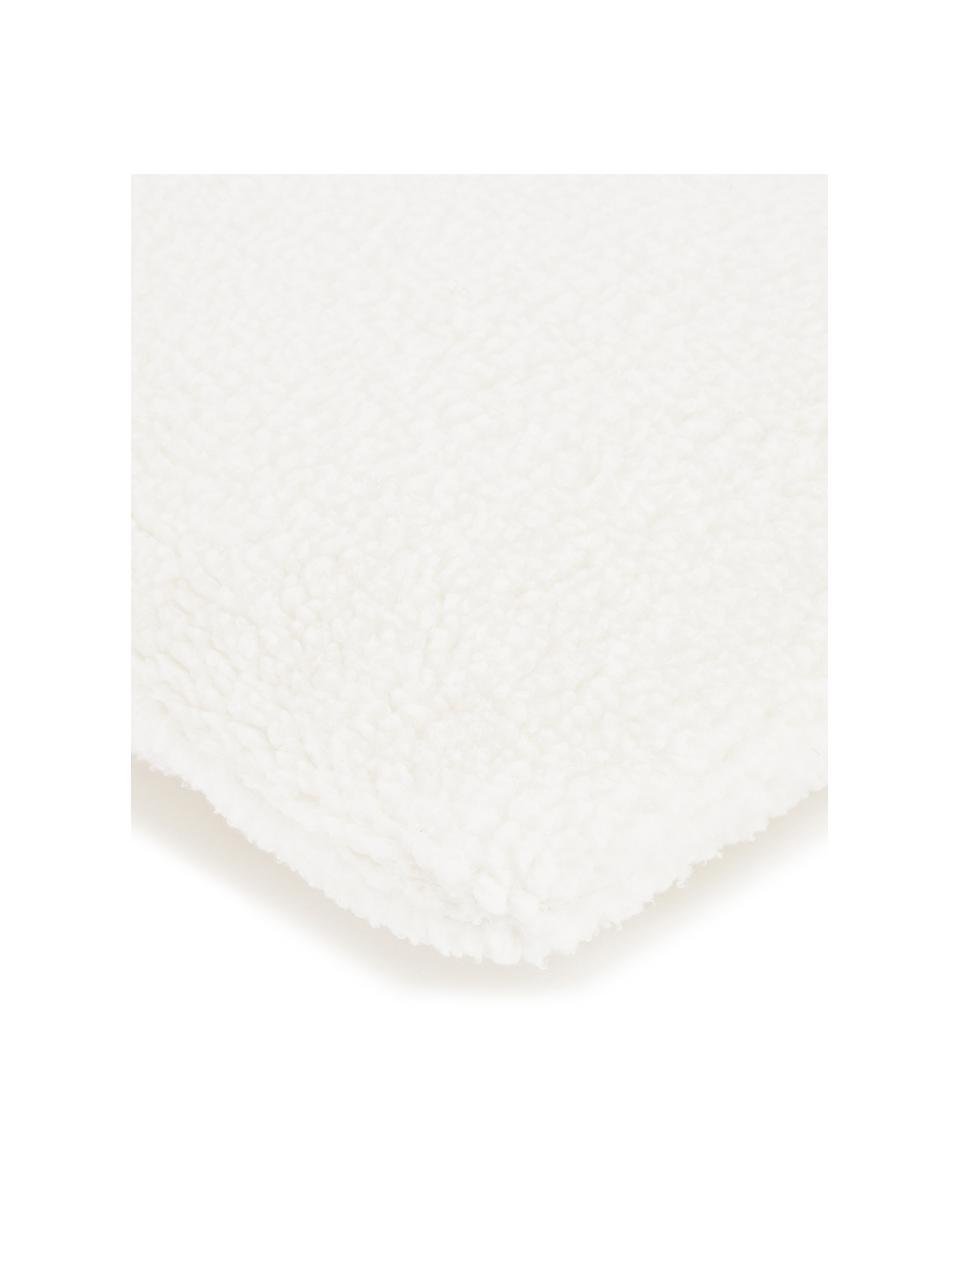 Federa arredo soffice in teddy color crema Mille, Retro: 100% poliestere (teddy), Crema, Larg. 30 x Lung. 50 cm